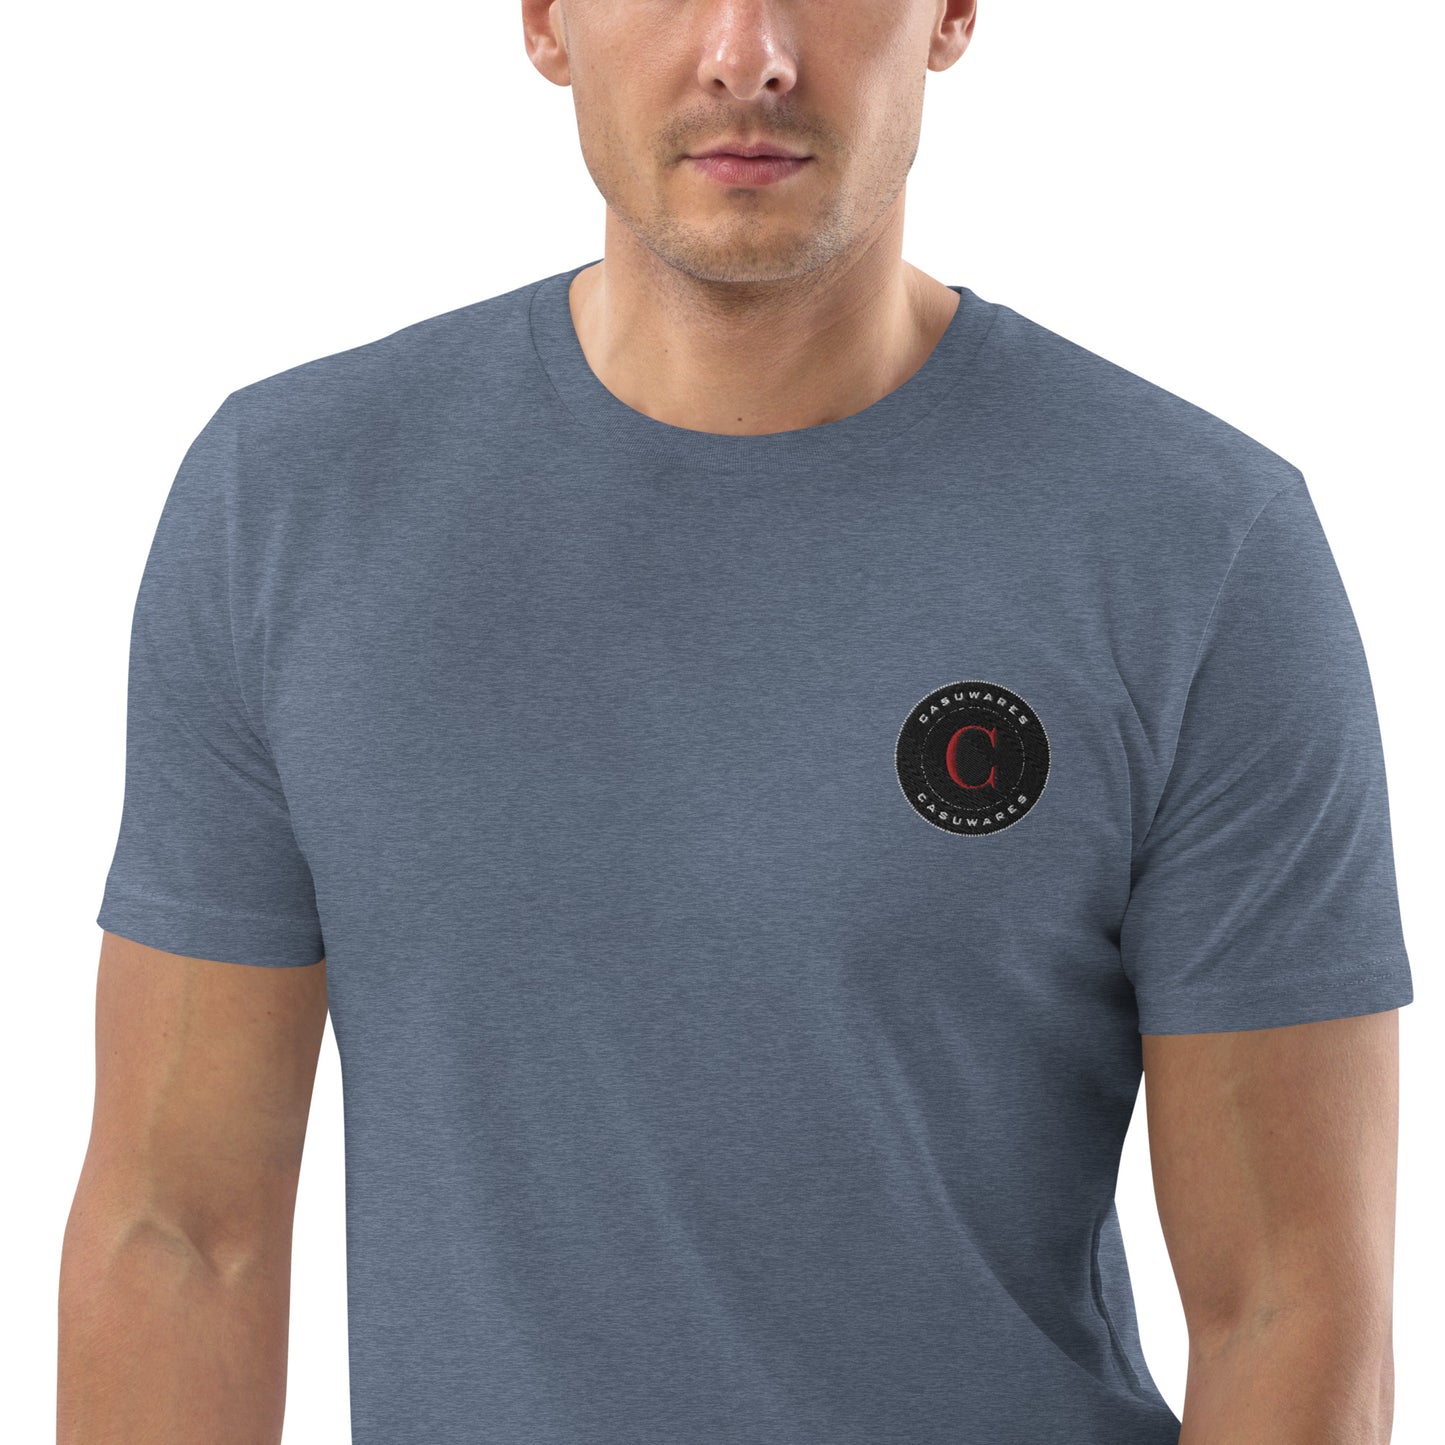 Men's organic cotton t-shirt